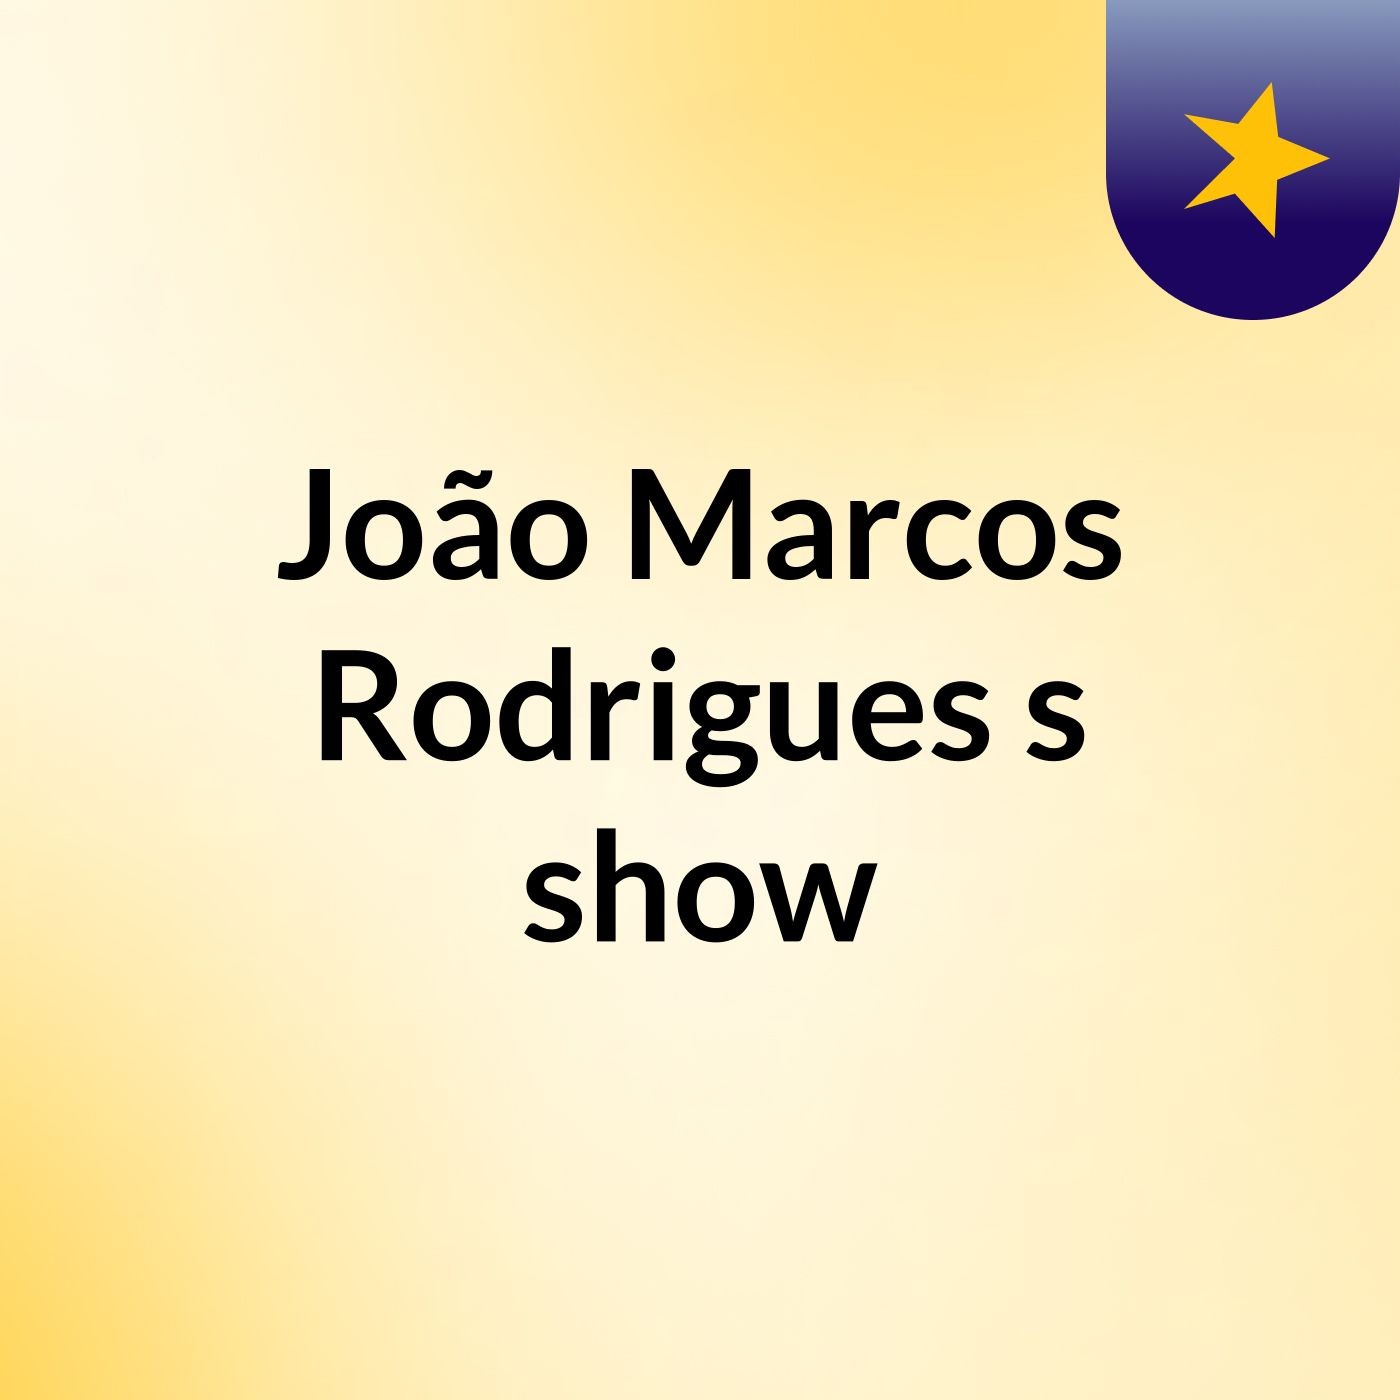 João Marcos Rodrigues's show